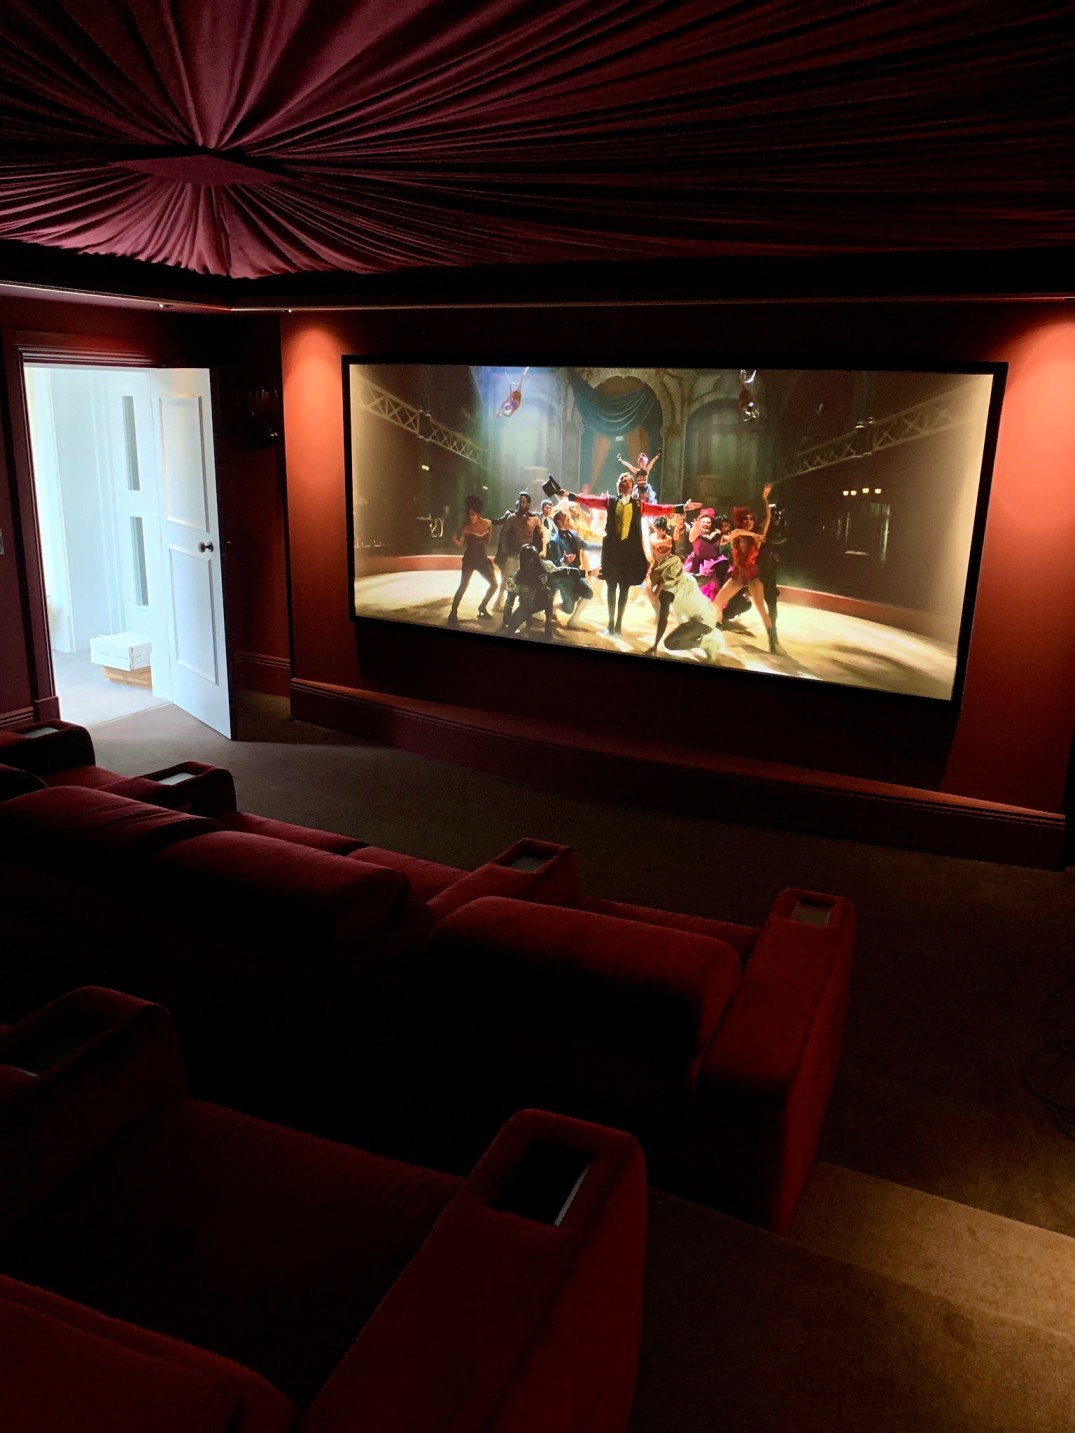 Angle of Home Cinema room showing projector screen, lighting, and cinema chairs